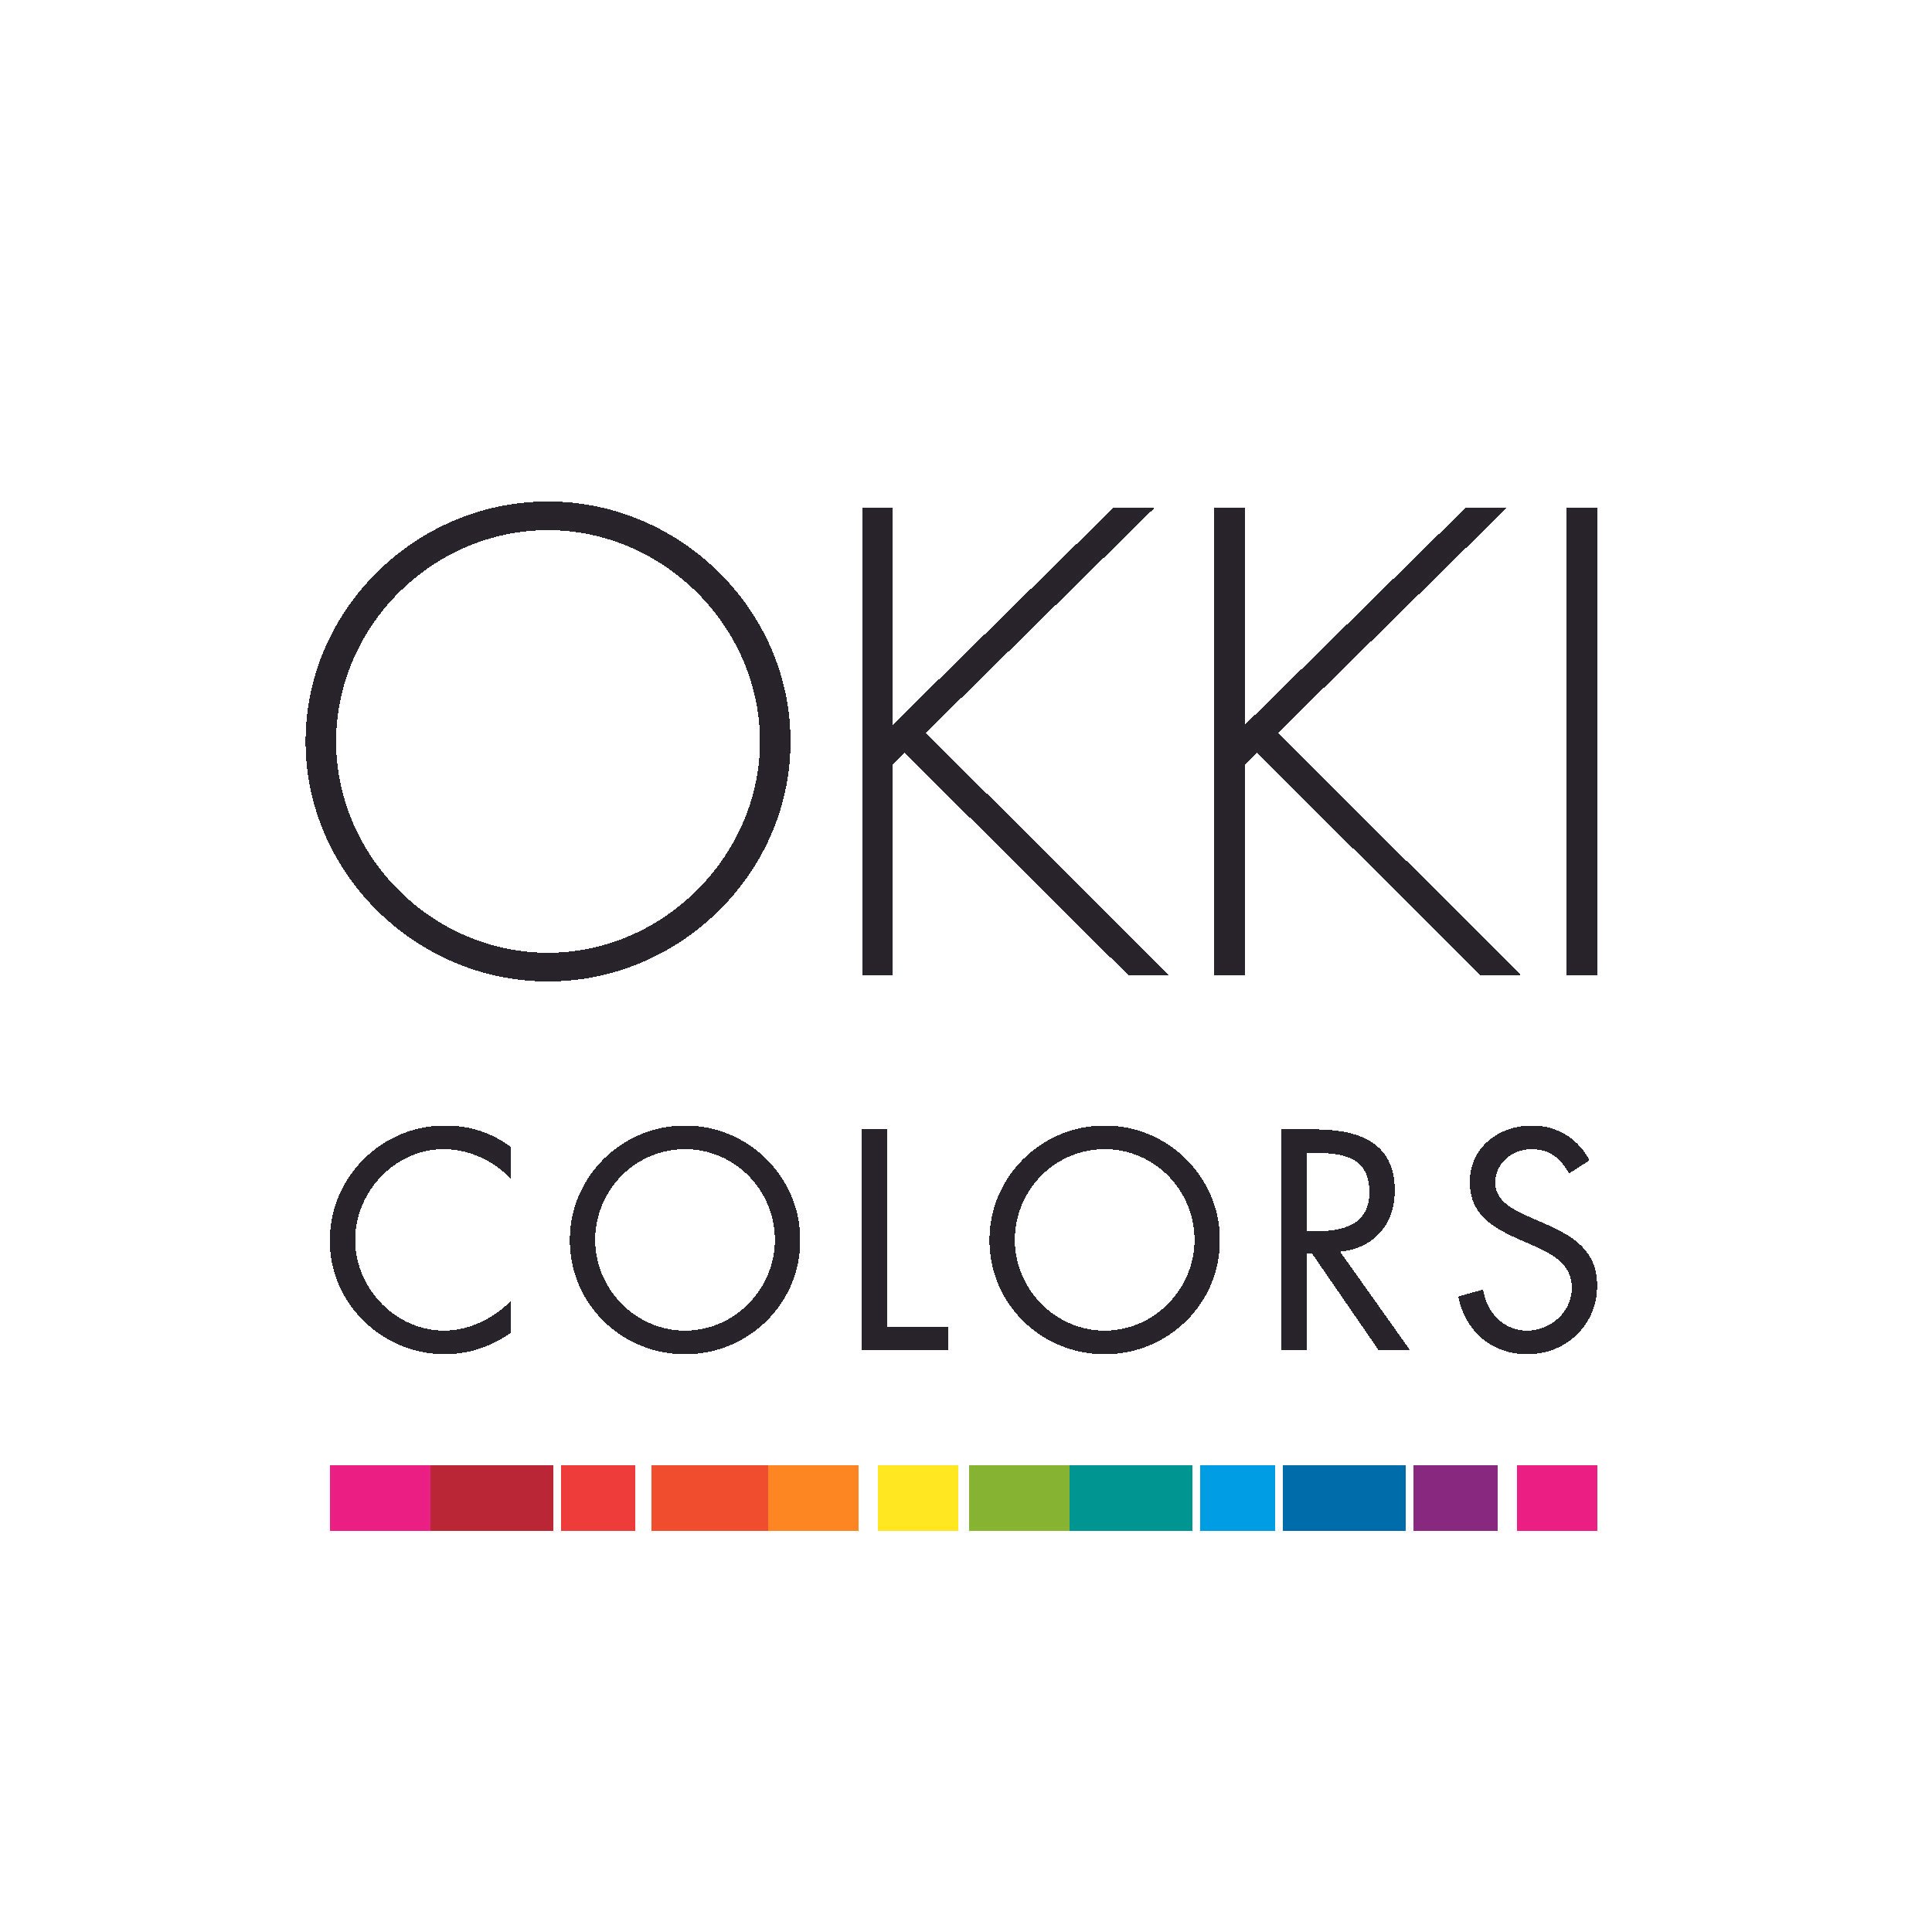 OKKI colors.jpg